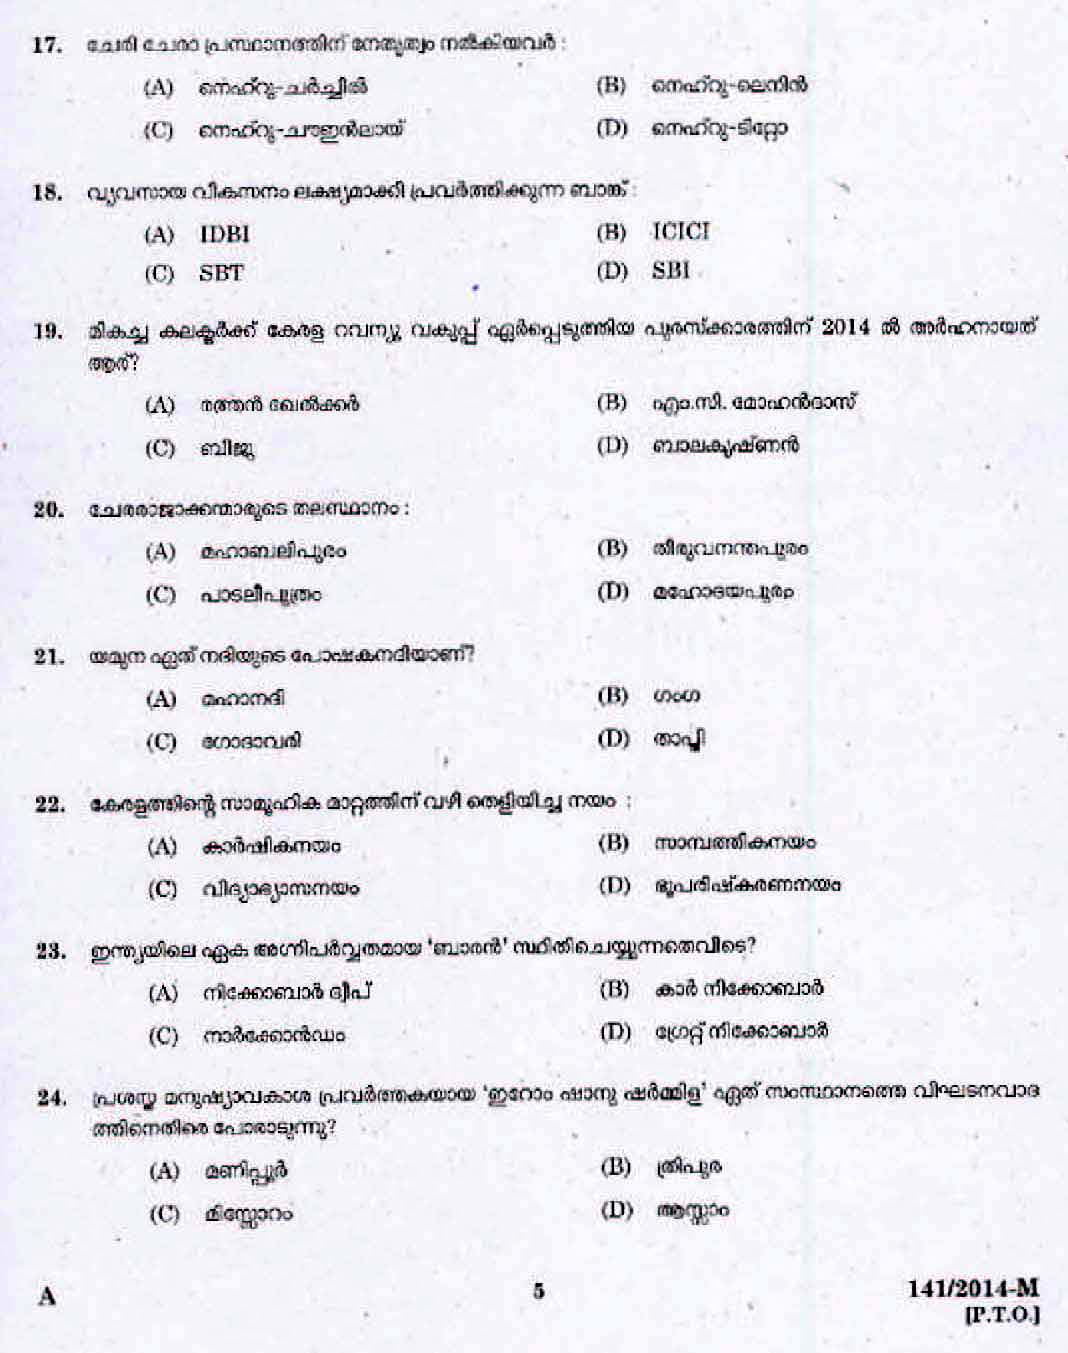 Kerala PSC Assistant Compiler Exam 2014 Question Paper Code 1412014 M 3